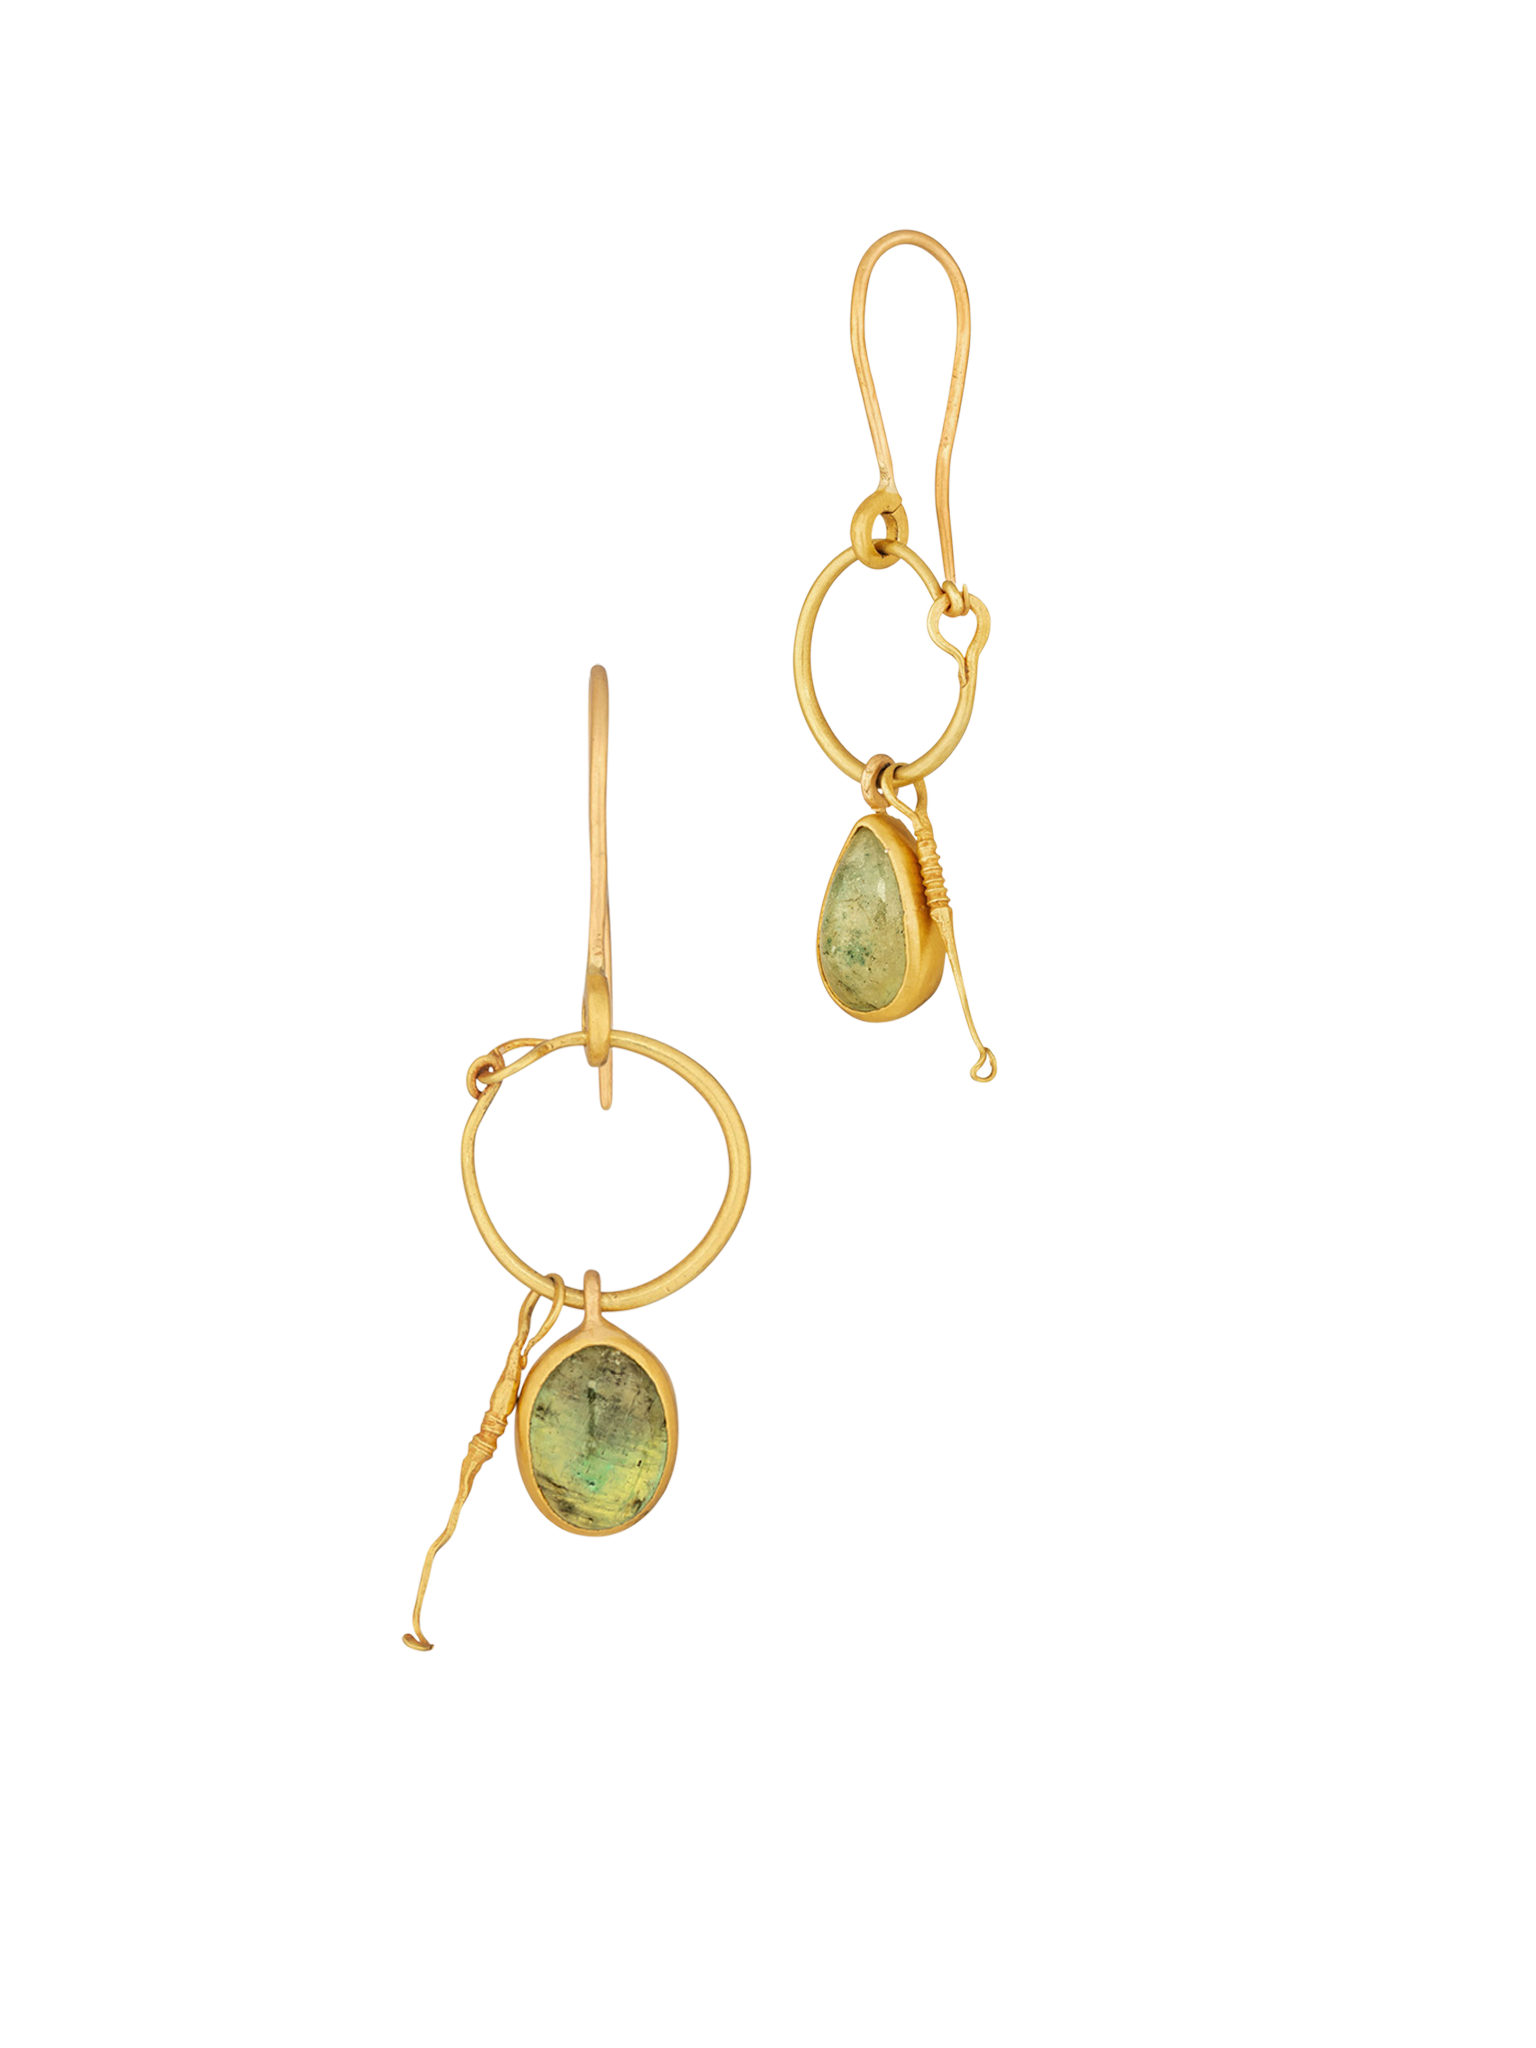 Thamara earrings - 18k solid gold